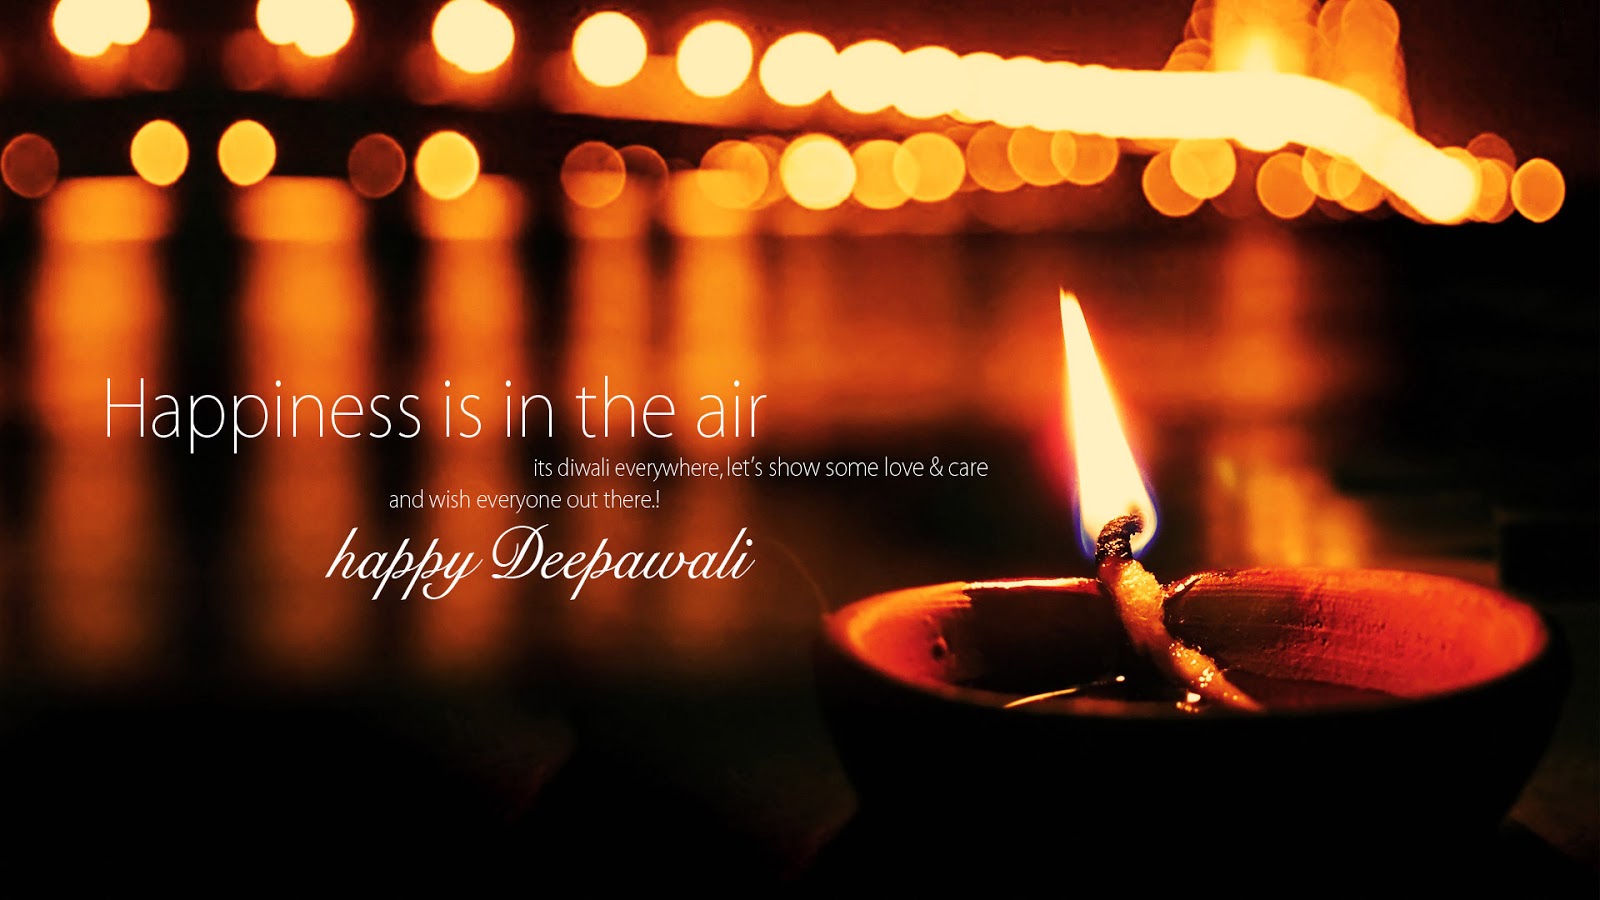 diwali wishes wallpaper,flame,heat,lighting,diwali,event